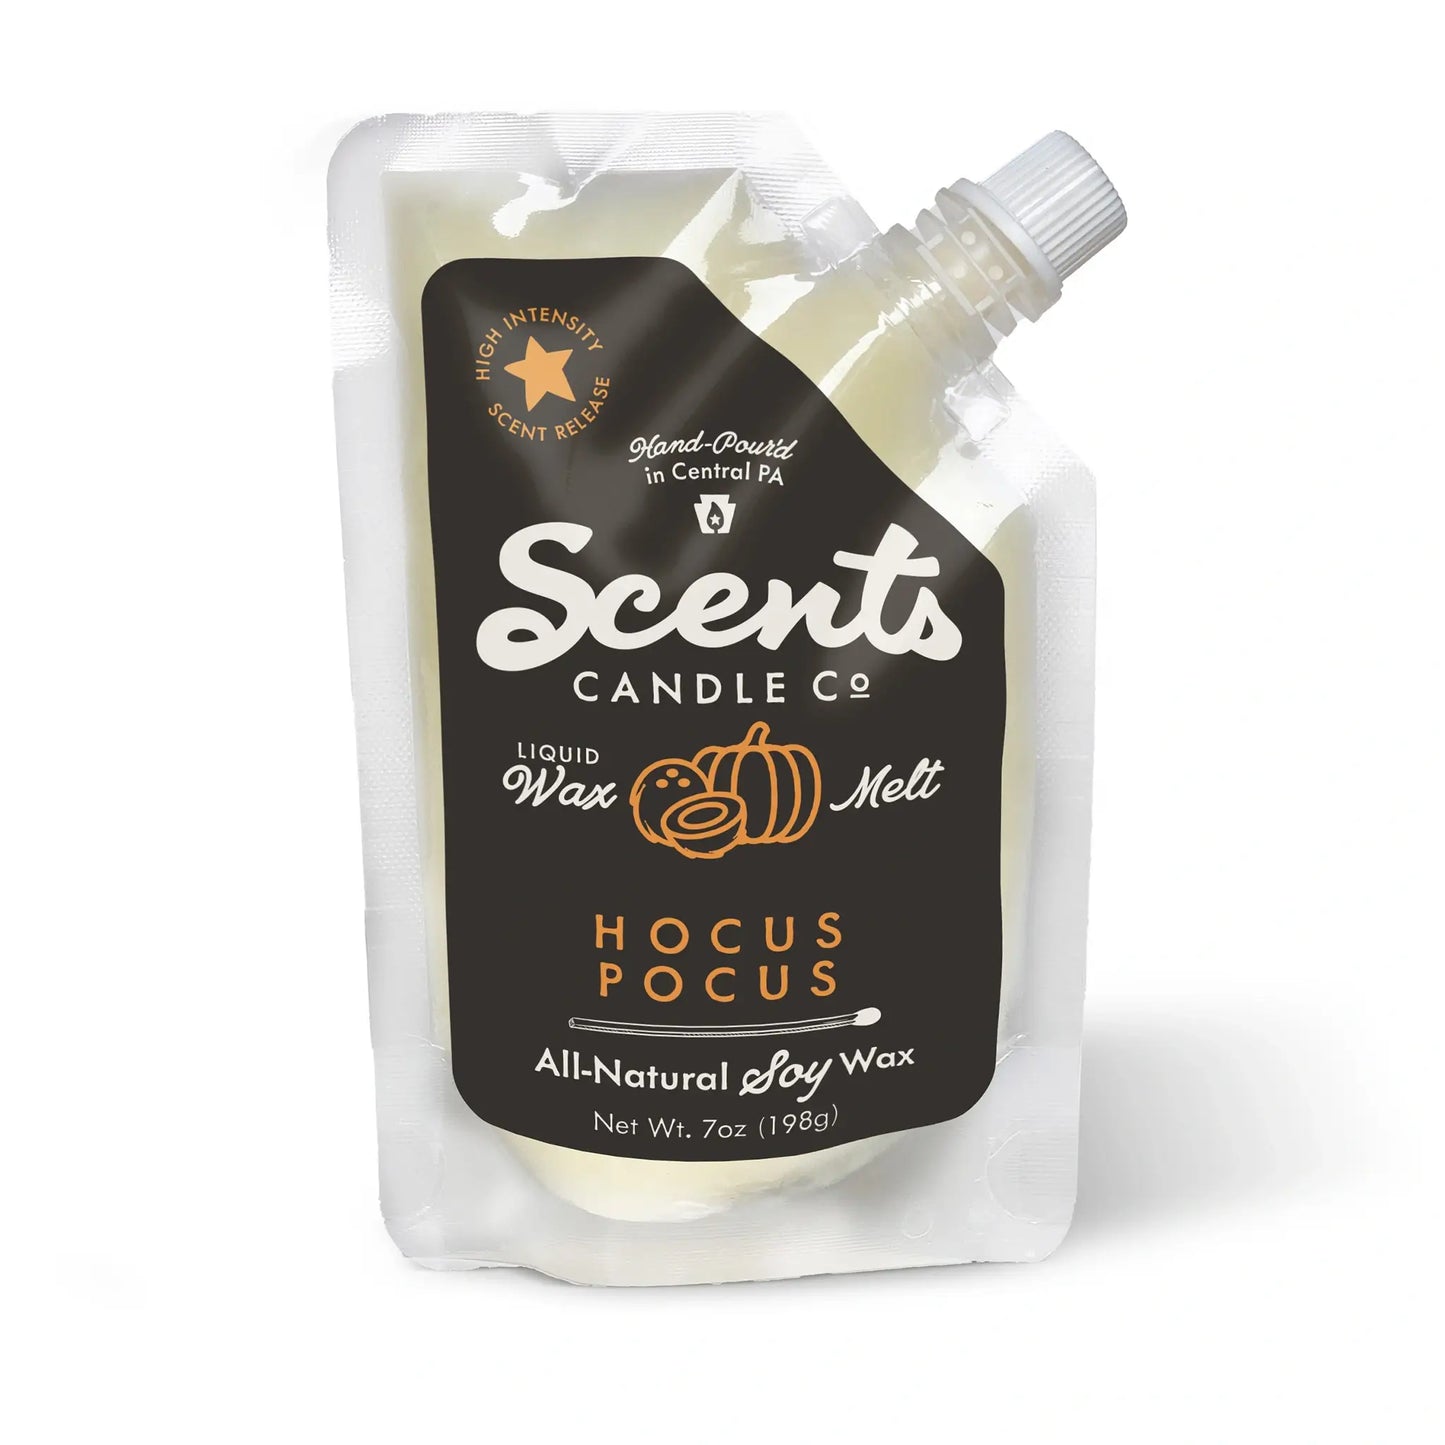 Scents Candle Co. Hocus Pocus Liquid Wax Melt